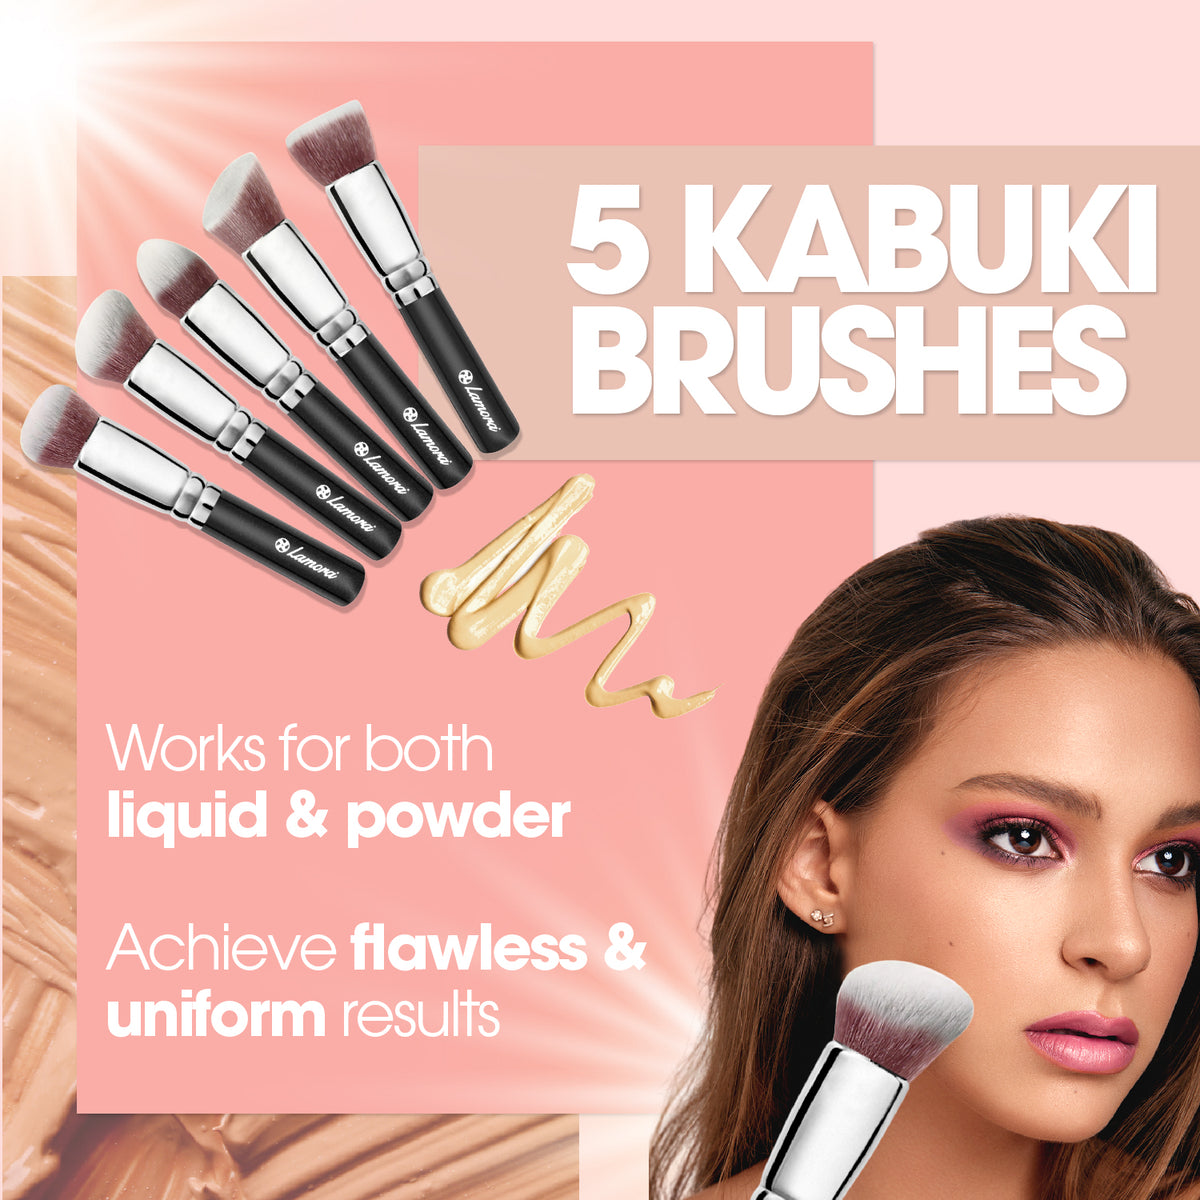 Contour Brush Set CA – Lamora Beauty